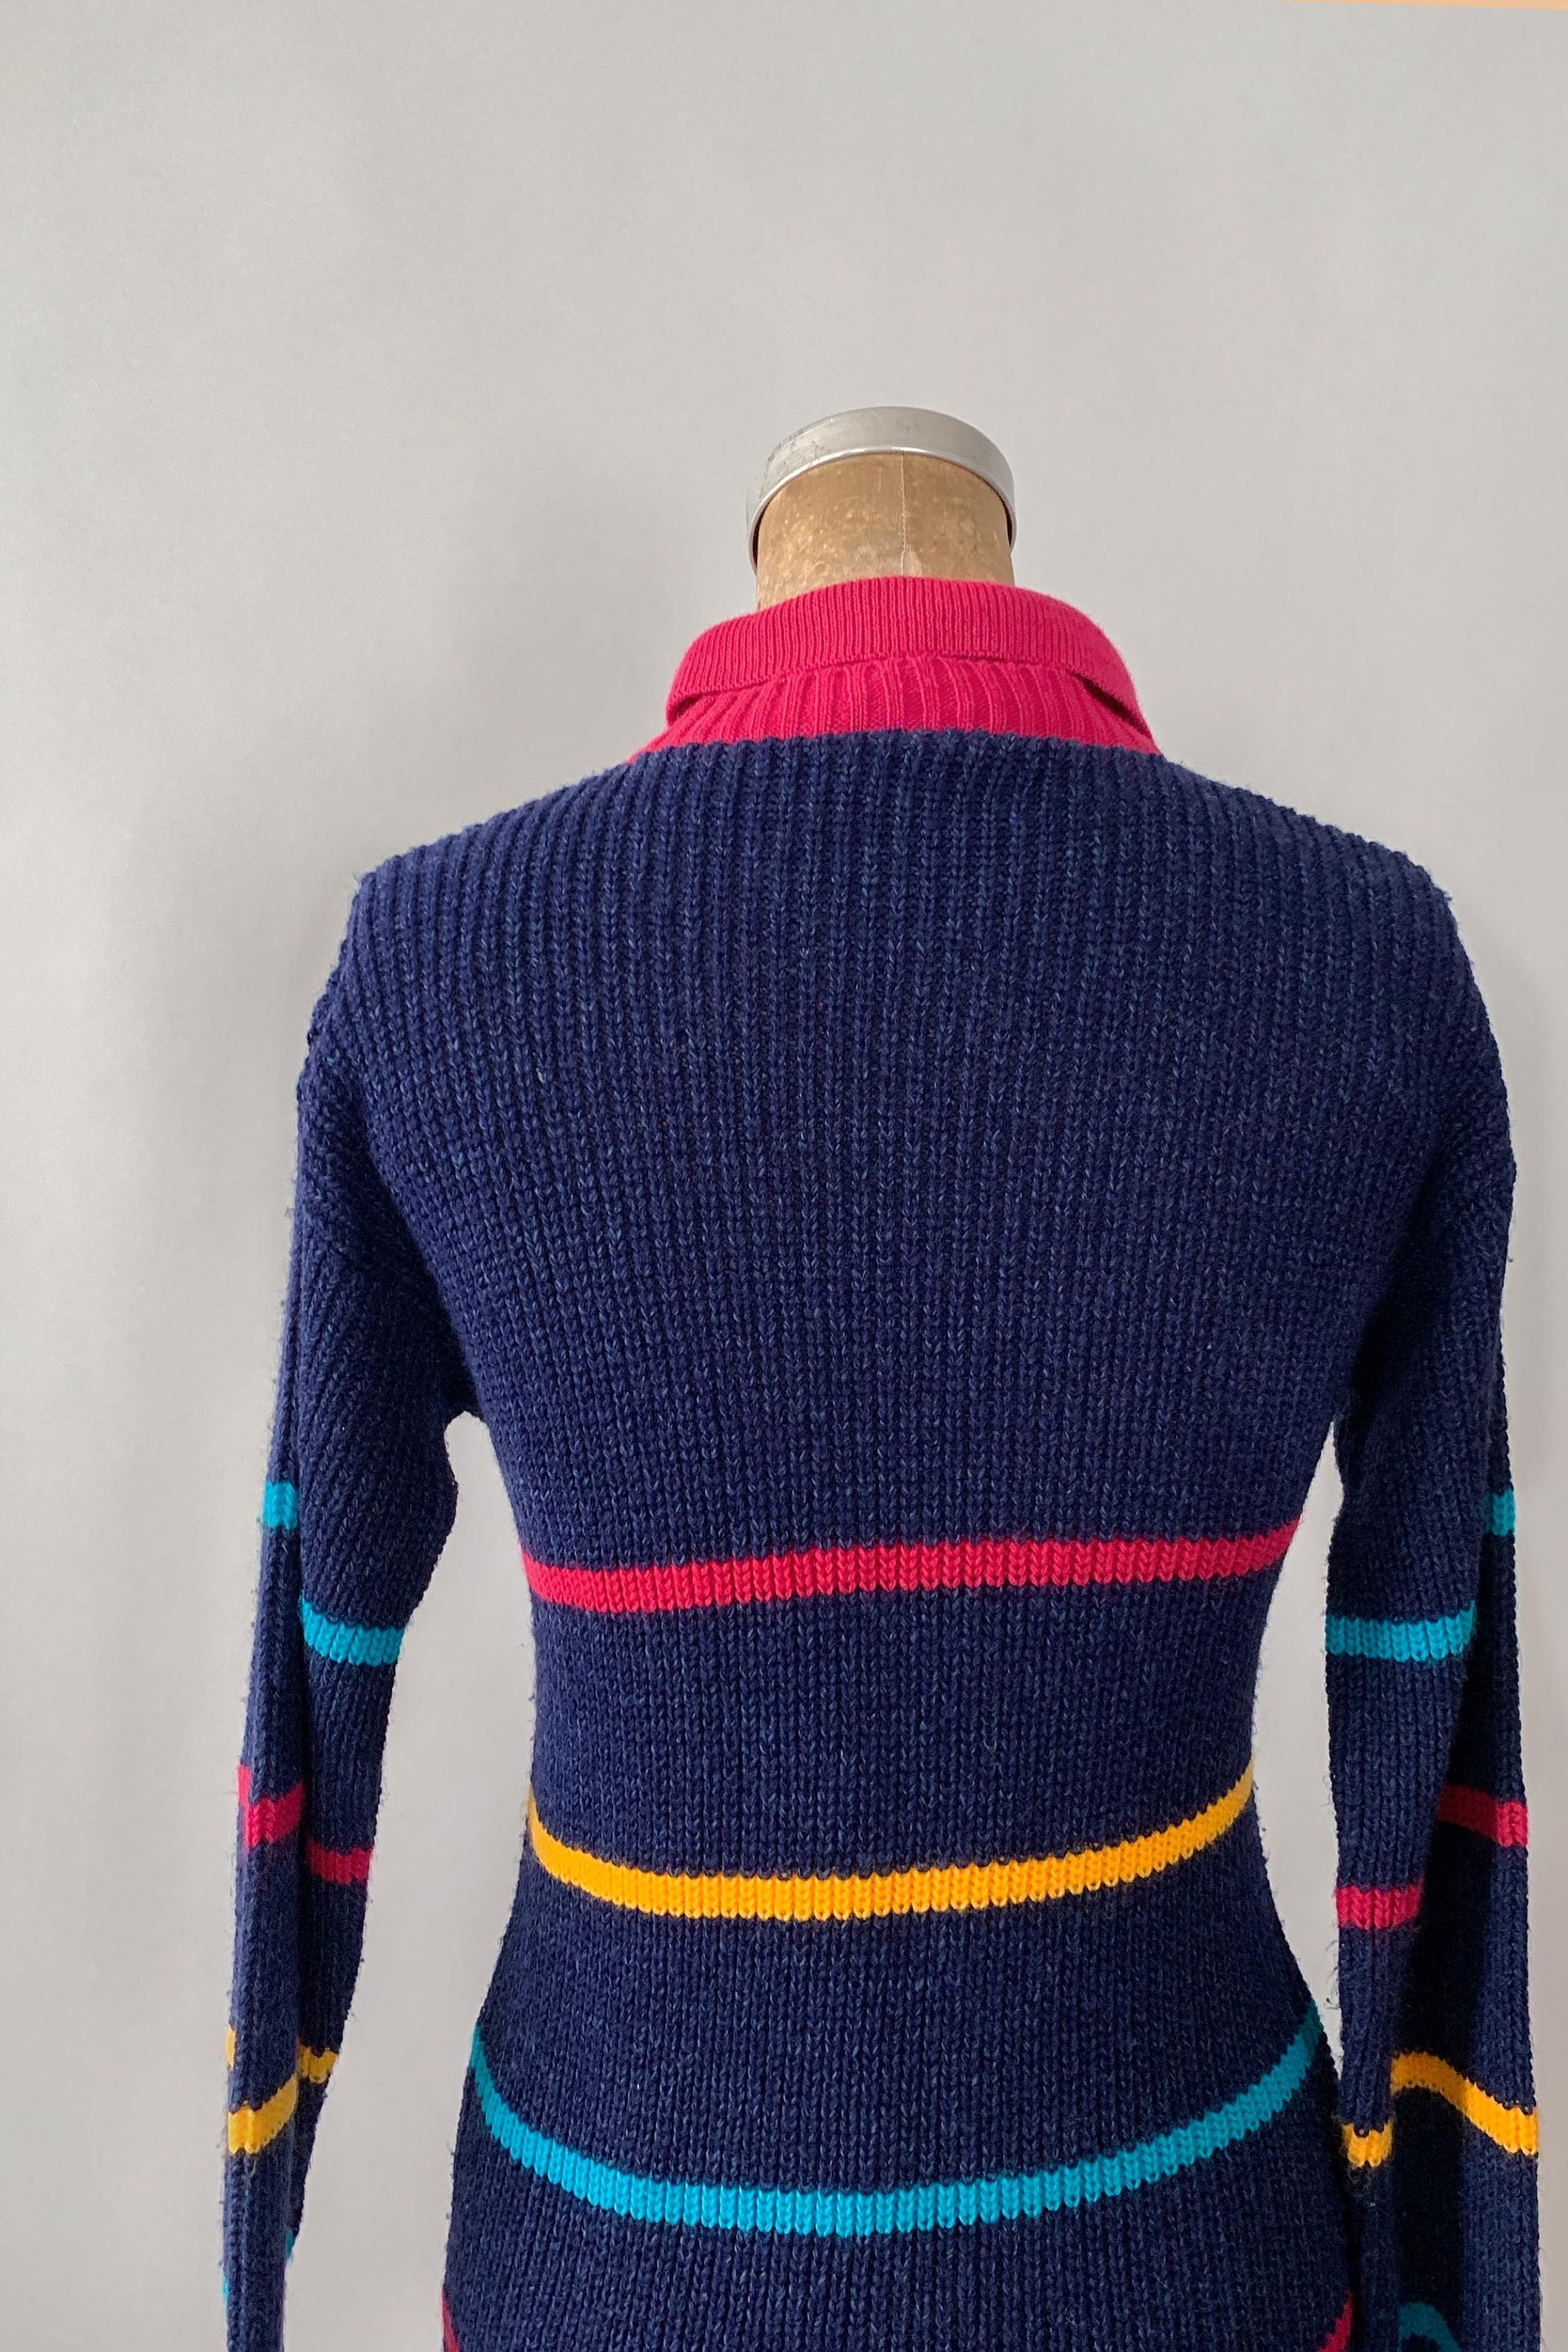 Vintage 1980s 80s rainbow stripe knit tunic sweater dress Extra small XS